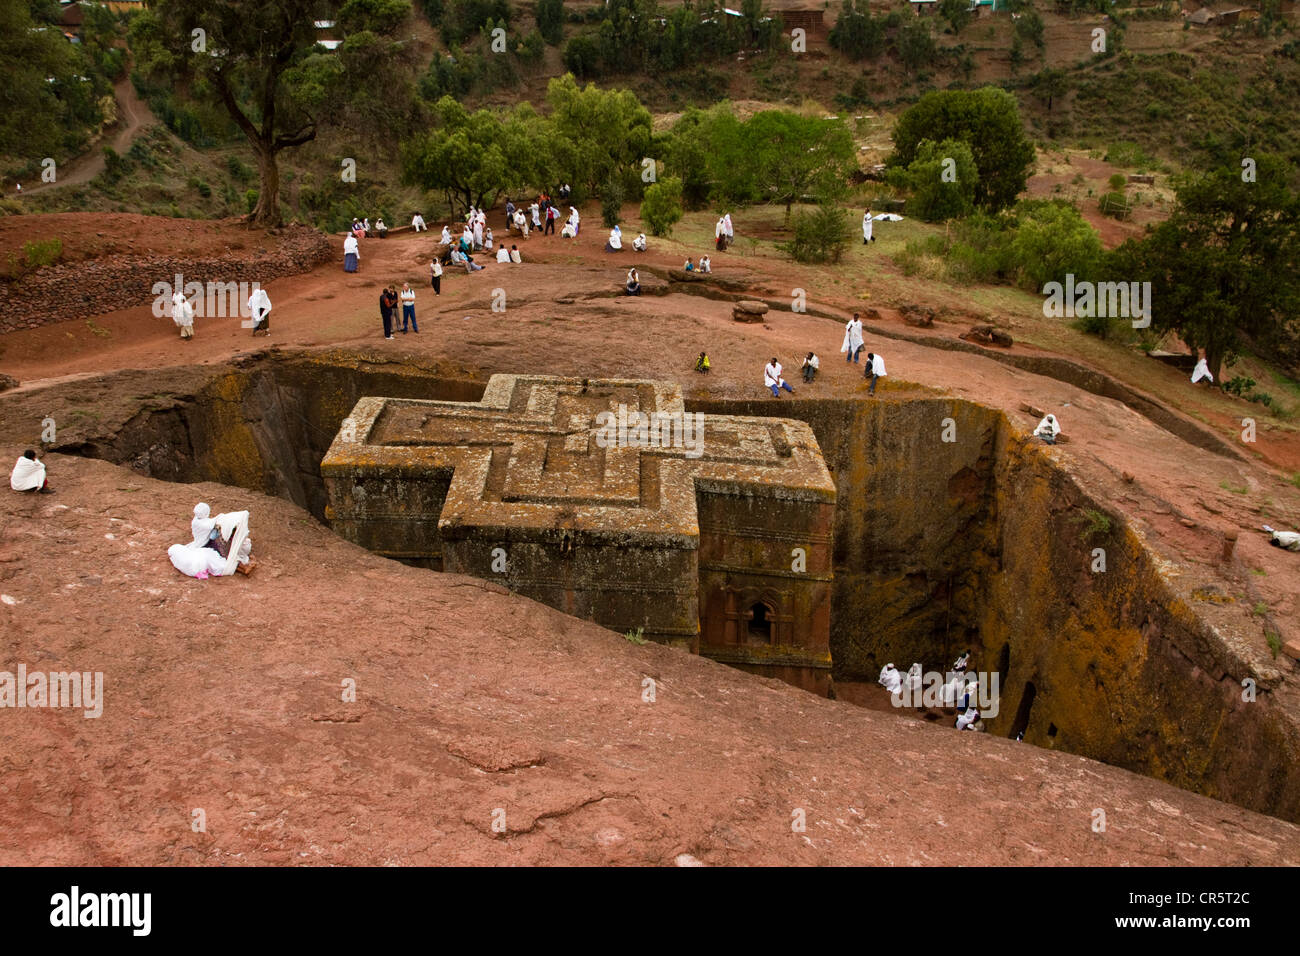 Bet Giyorgis Fels gehauene Kirche, Lalibela, Äthiopien, Afrika Stockfoto